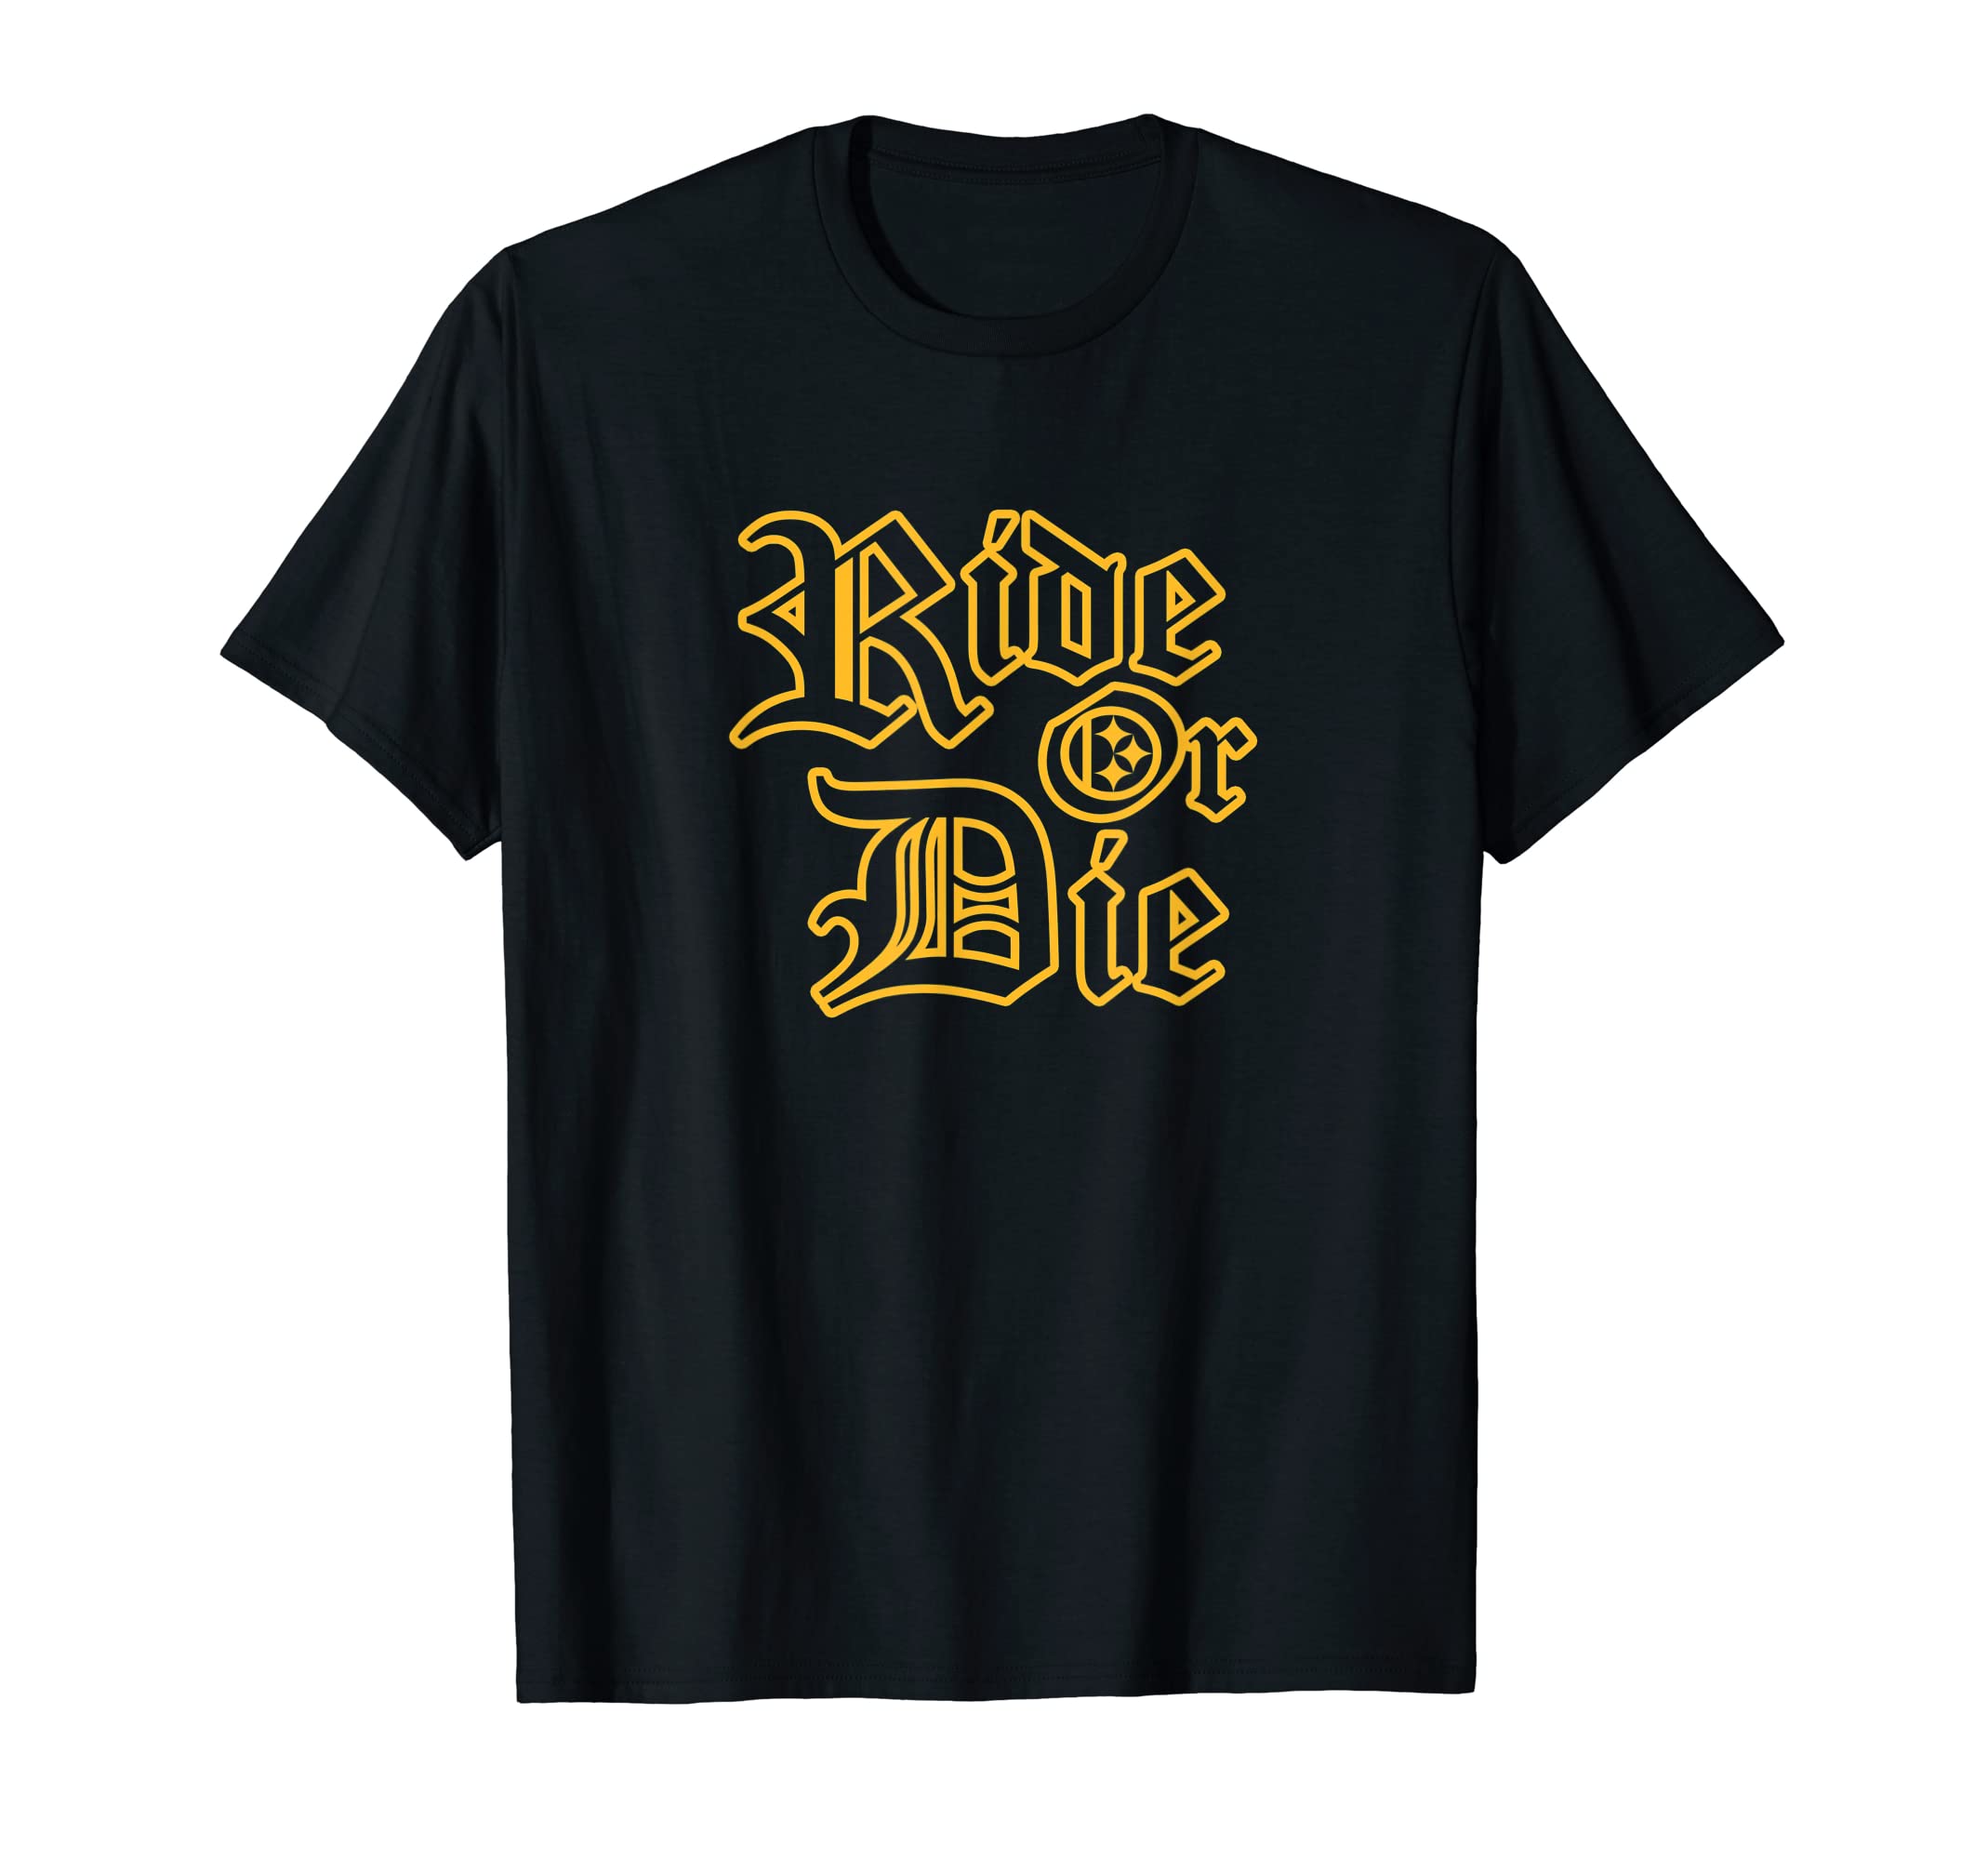 Steelers Ride or Die (Shirts & More)